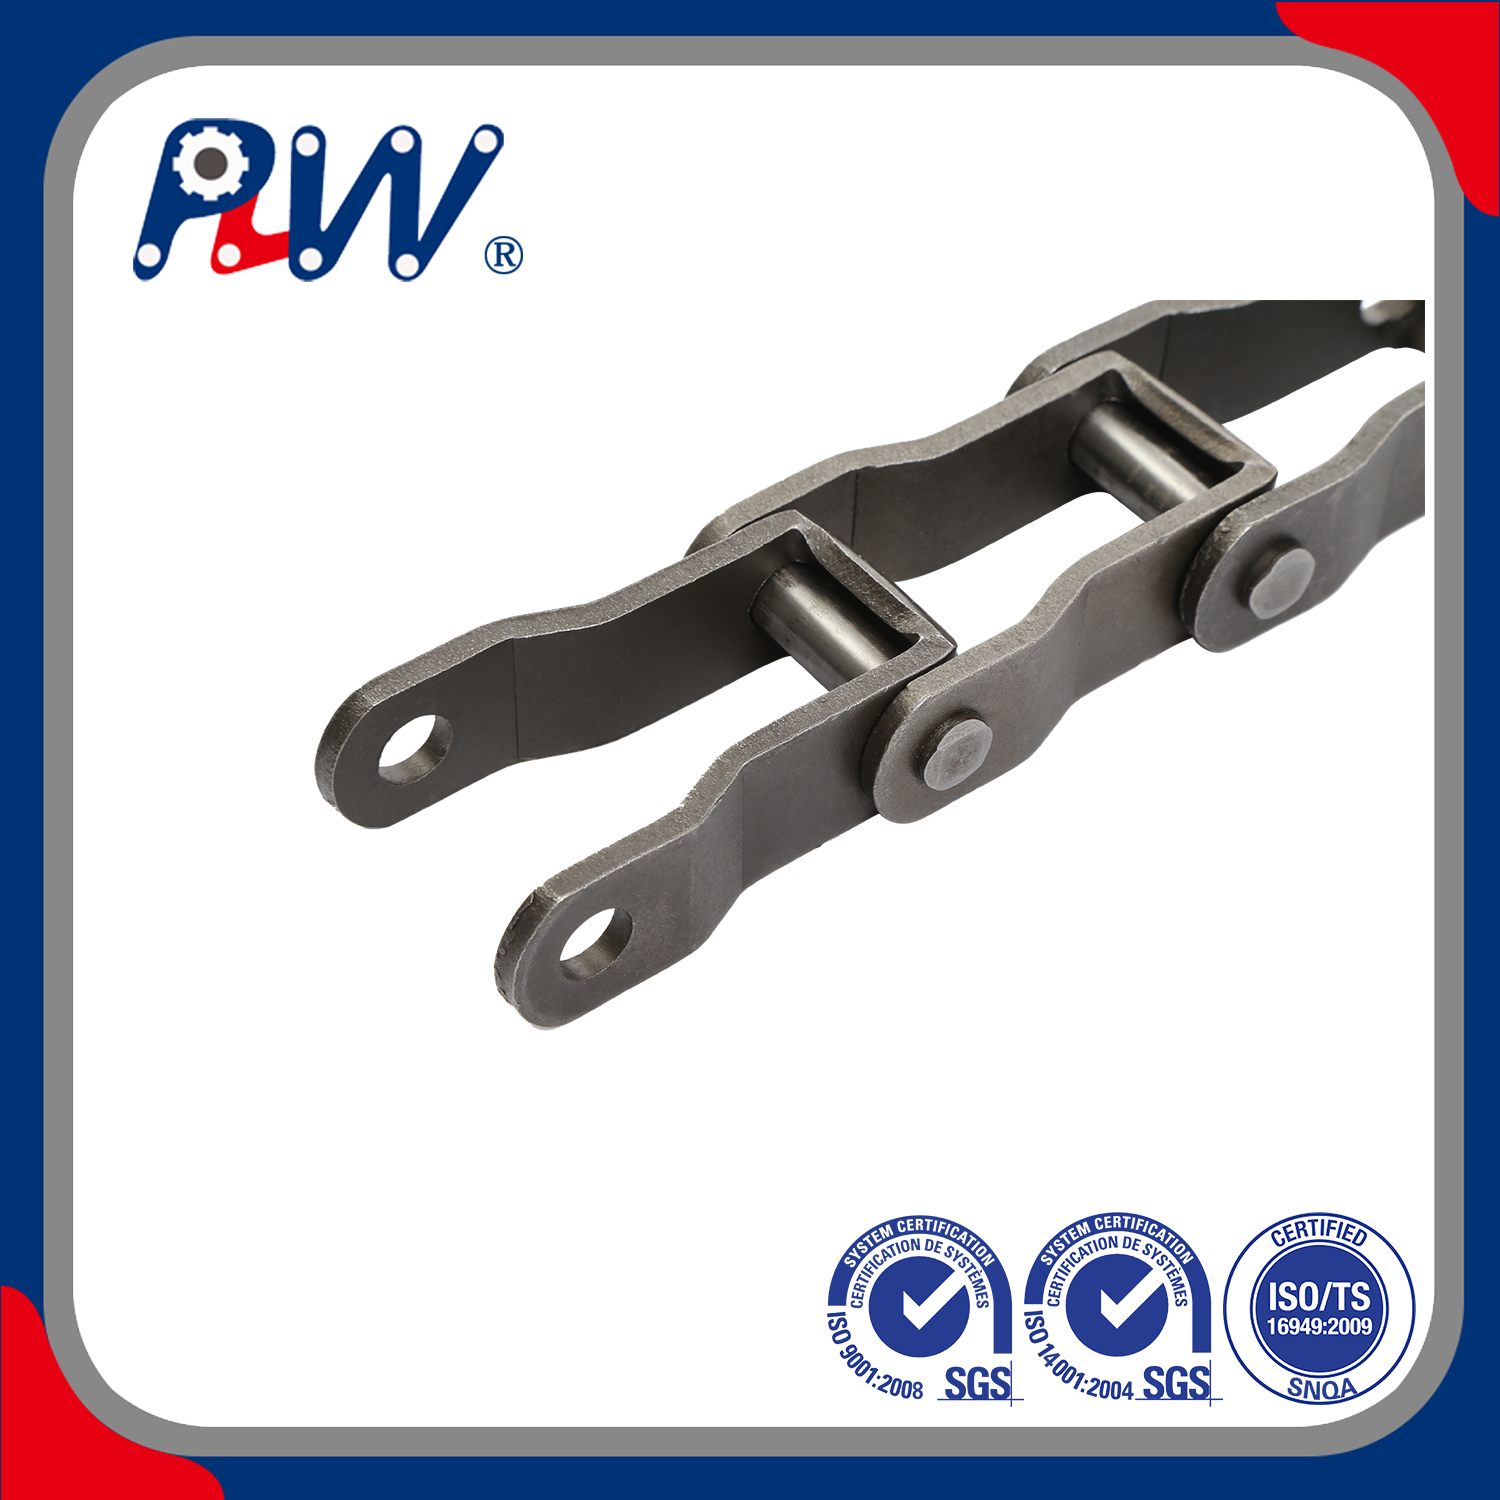 Steel Pintle Conveyor Chain with Long Life (667J)